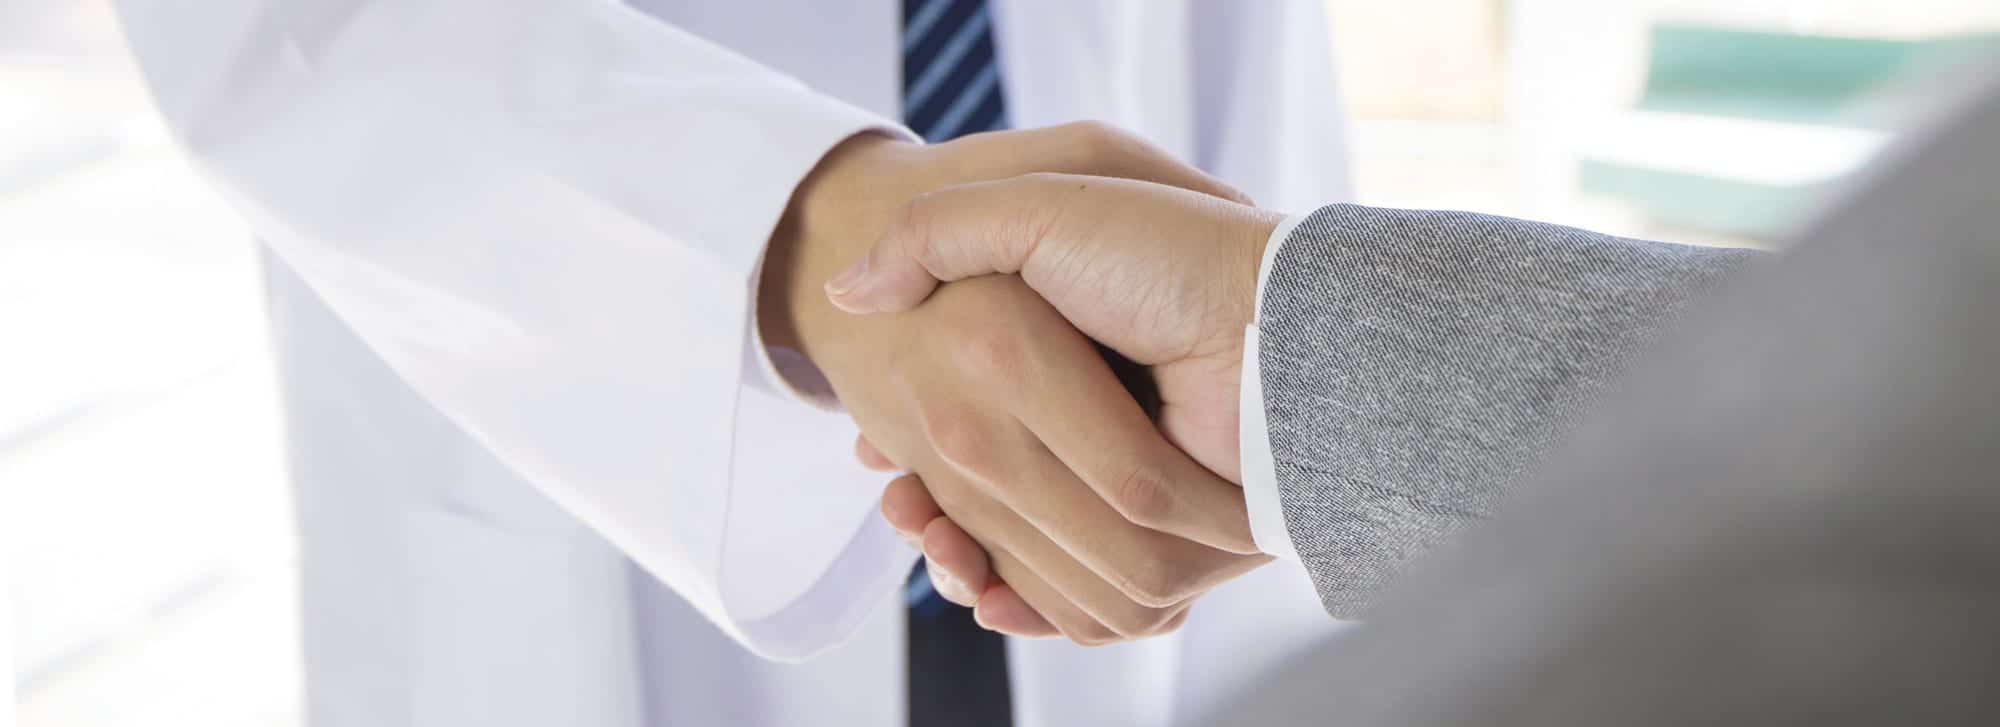 Medical professional and sales representative shaking hands